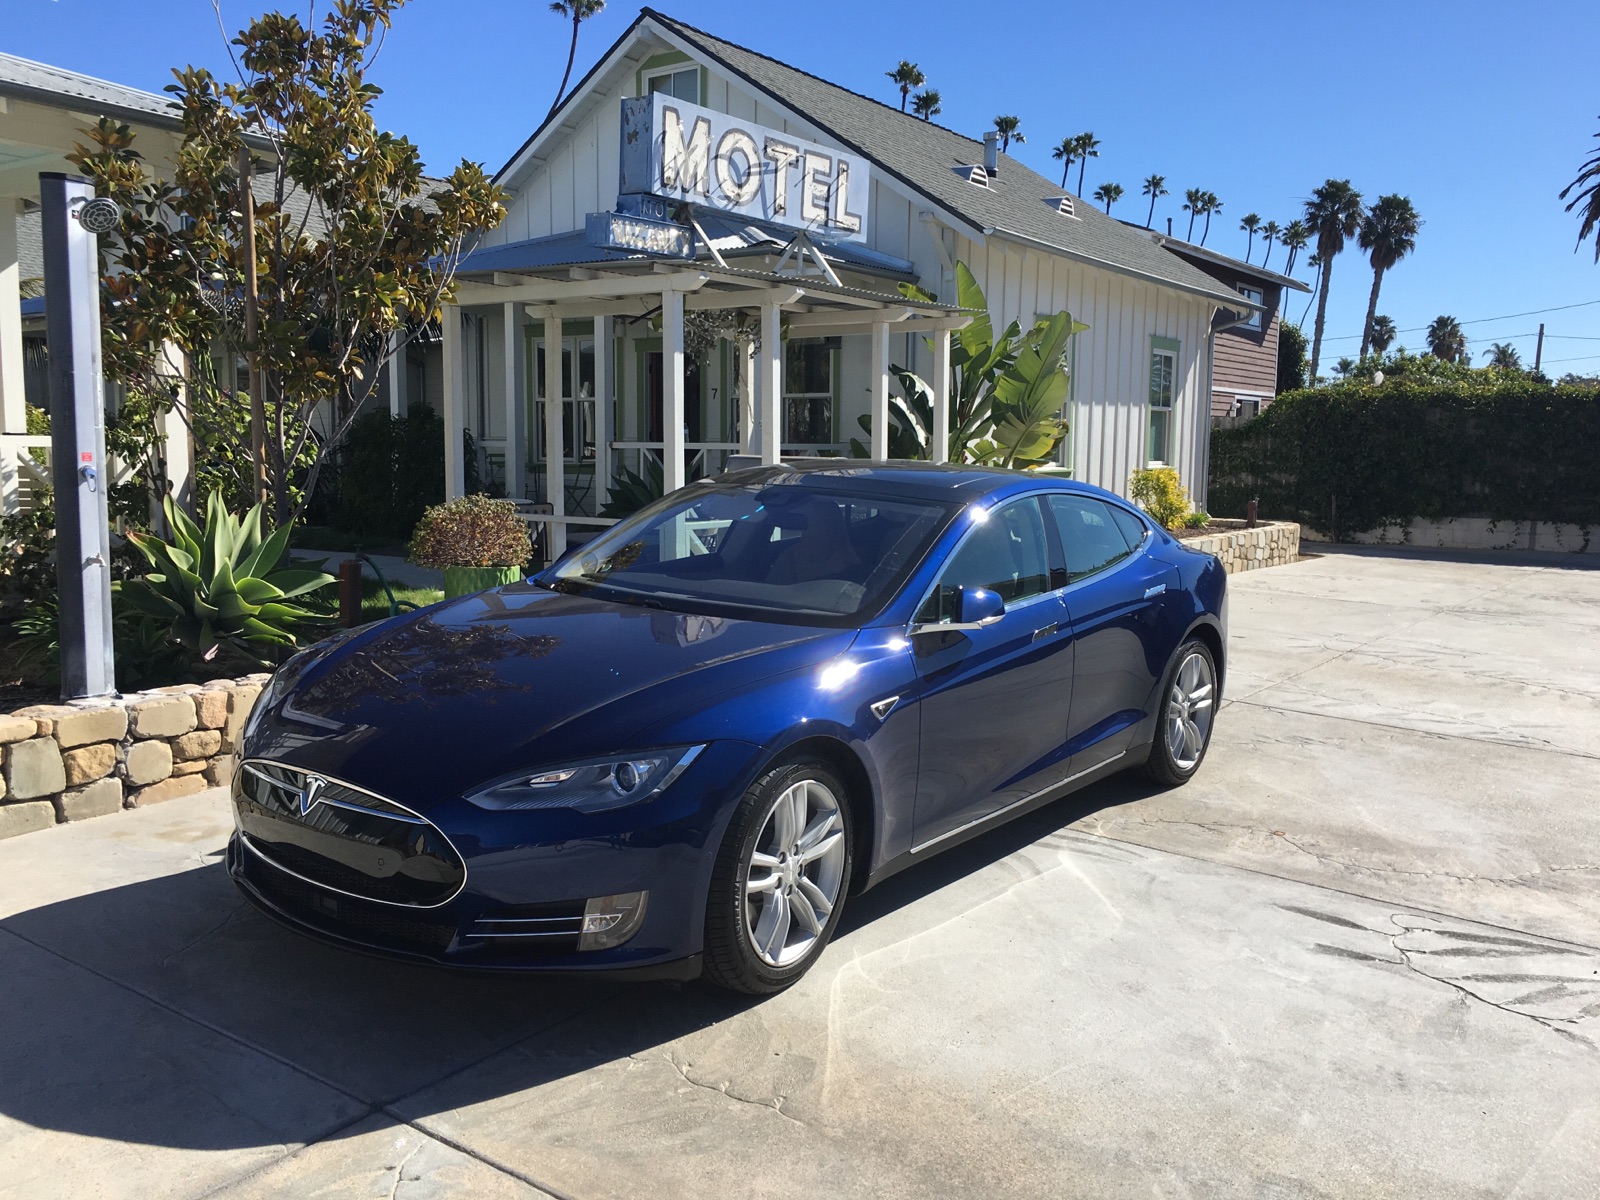 Old Vs New: 2016 Tesla Model S 90D Compared To Original Version